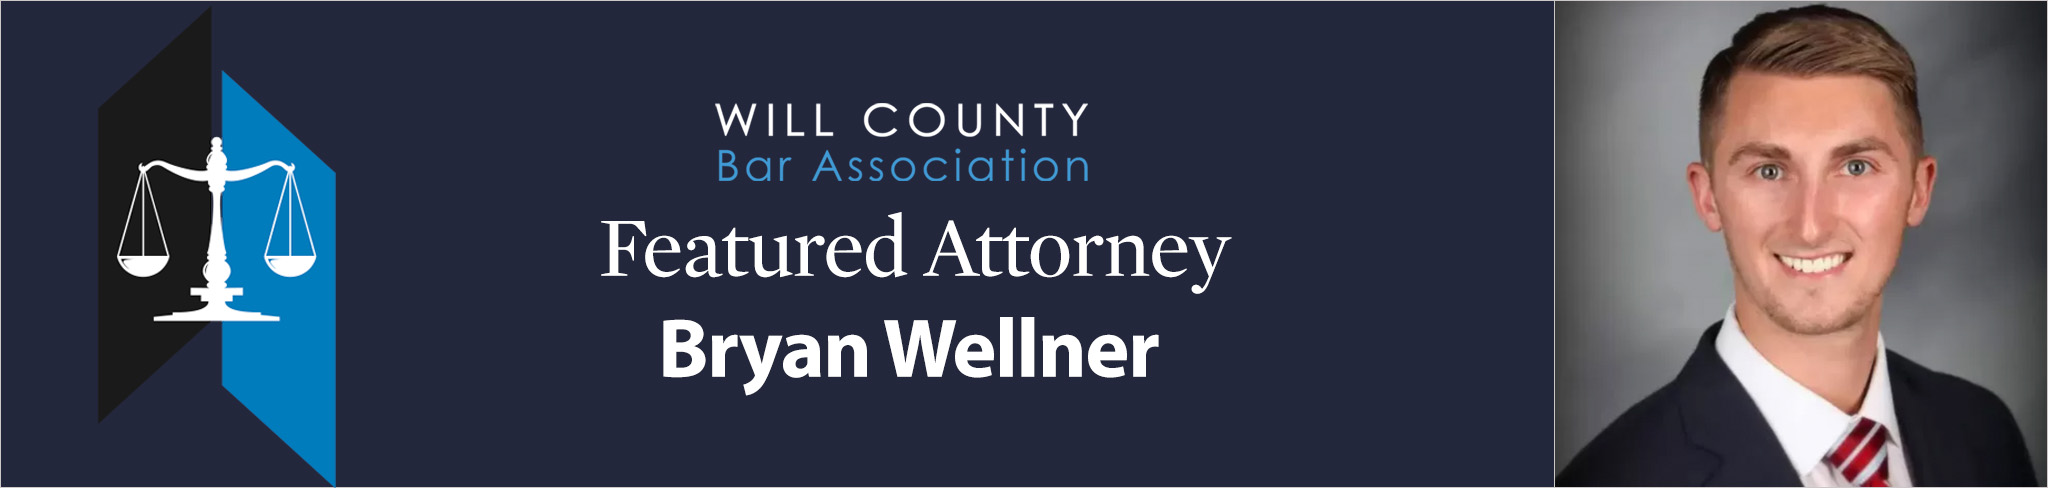 Featured attorney photo of Bryan Wellner